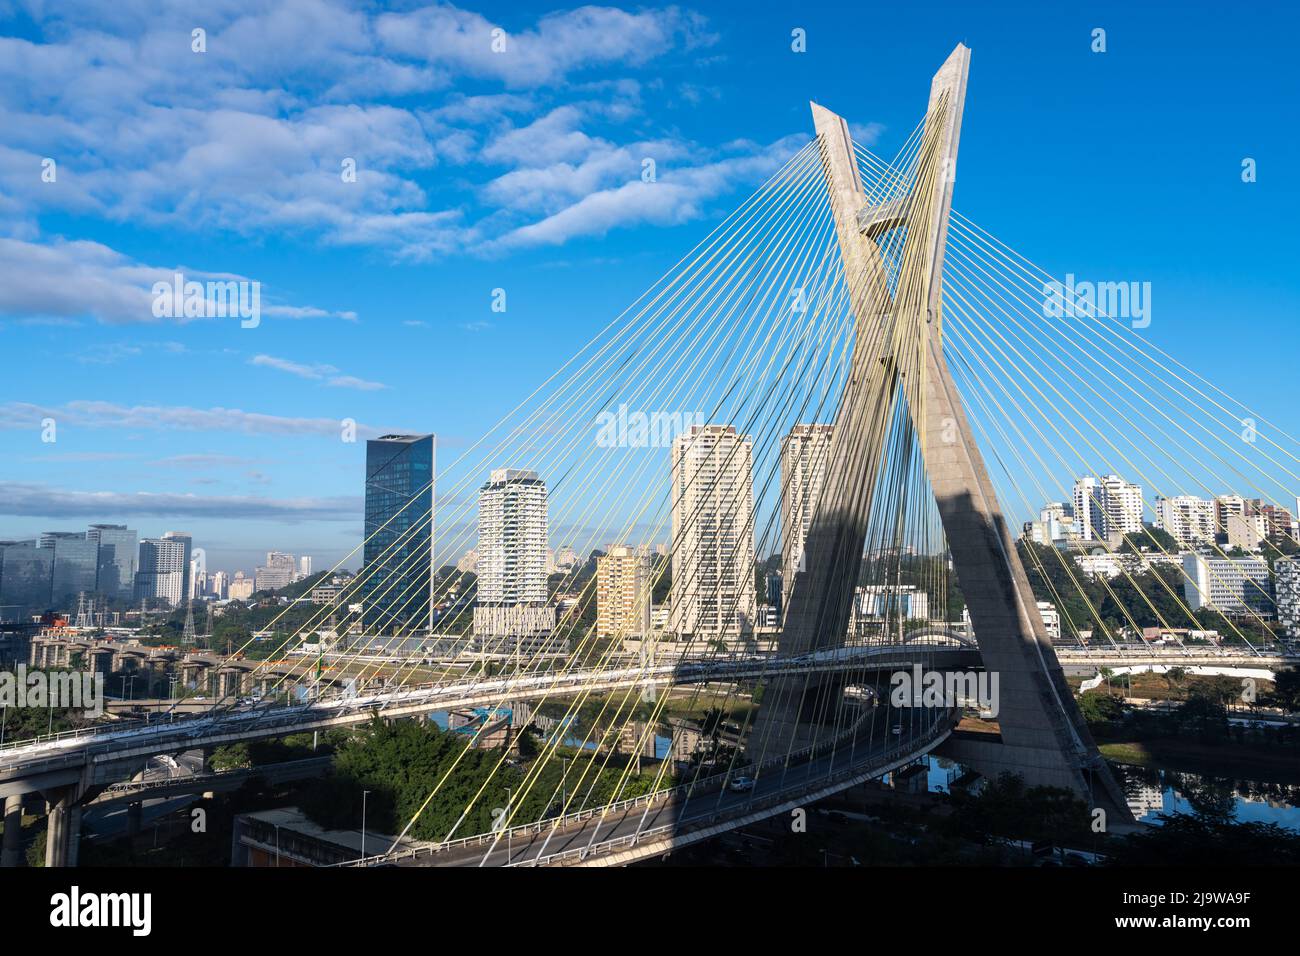 Aerial view of Sao Paulo city skyline, marginal Pinheiros avenue, modern Cable stayed bridge, Pinheiros River and corporate buildings, Brazil. Stock Photo